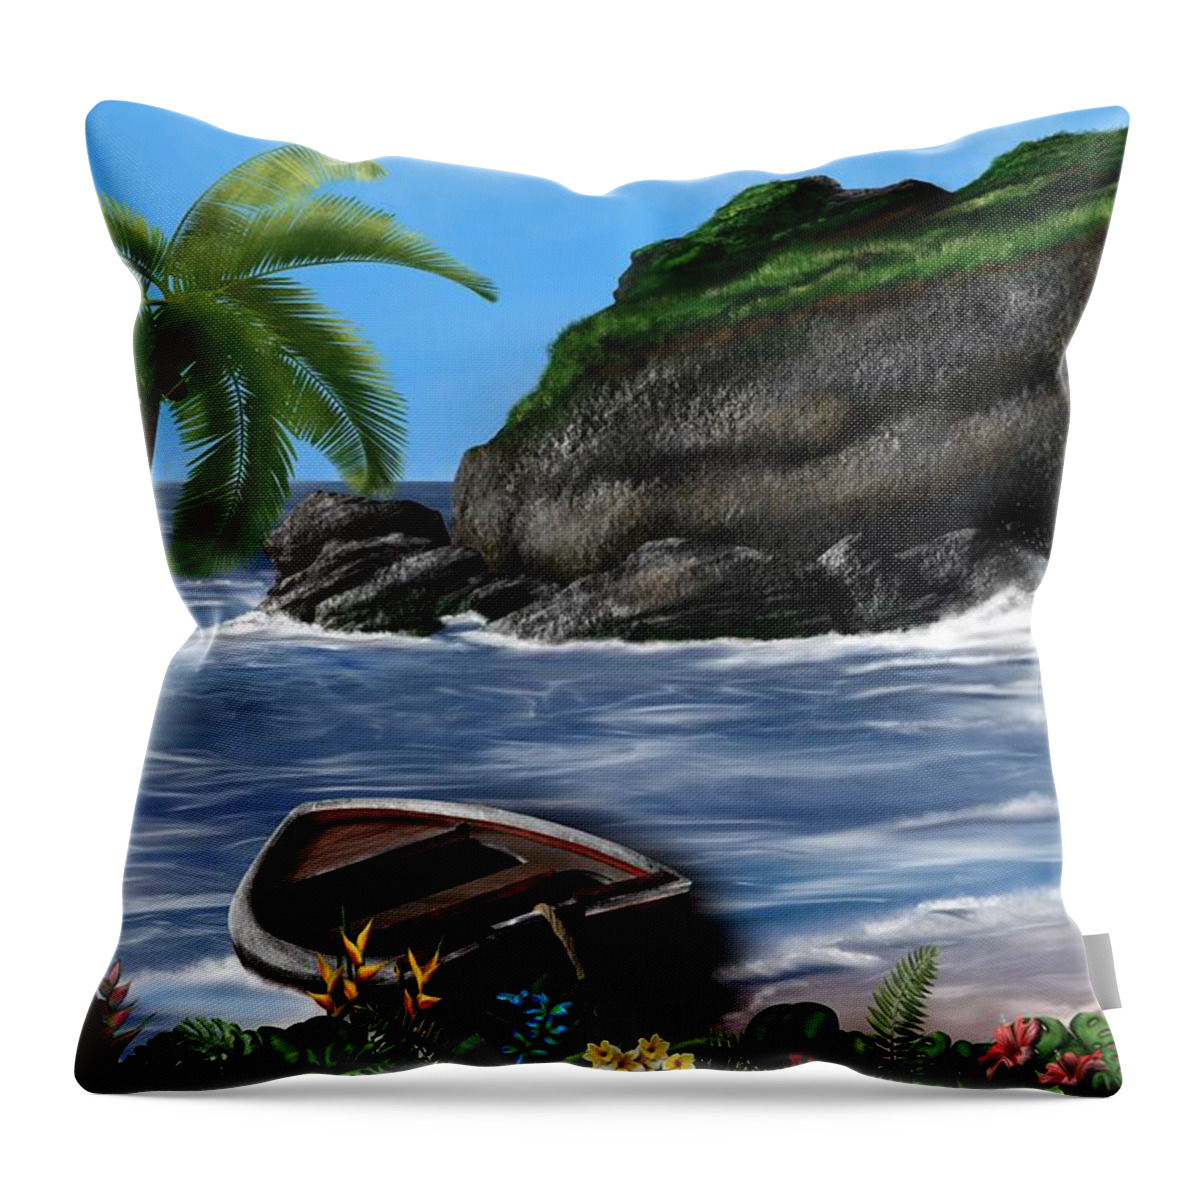 “meet Me At The Beach” Throw Pillow featuring the digital art Meet me at the beach by Mark Taylor